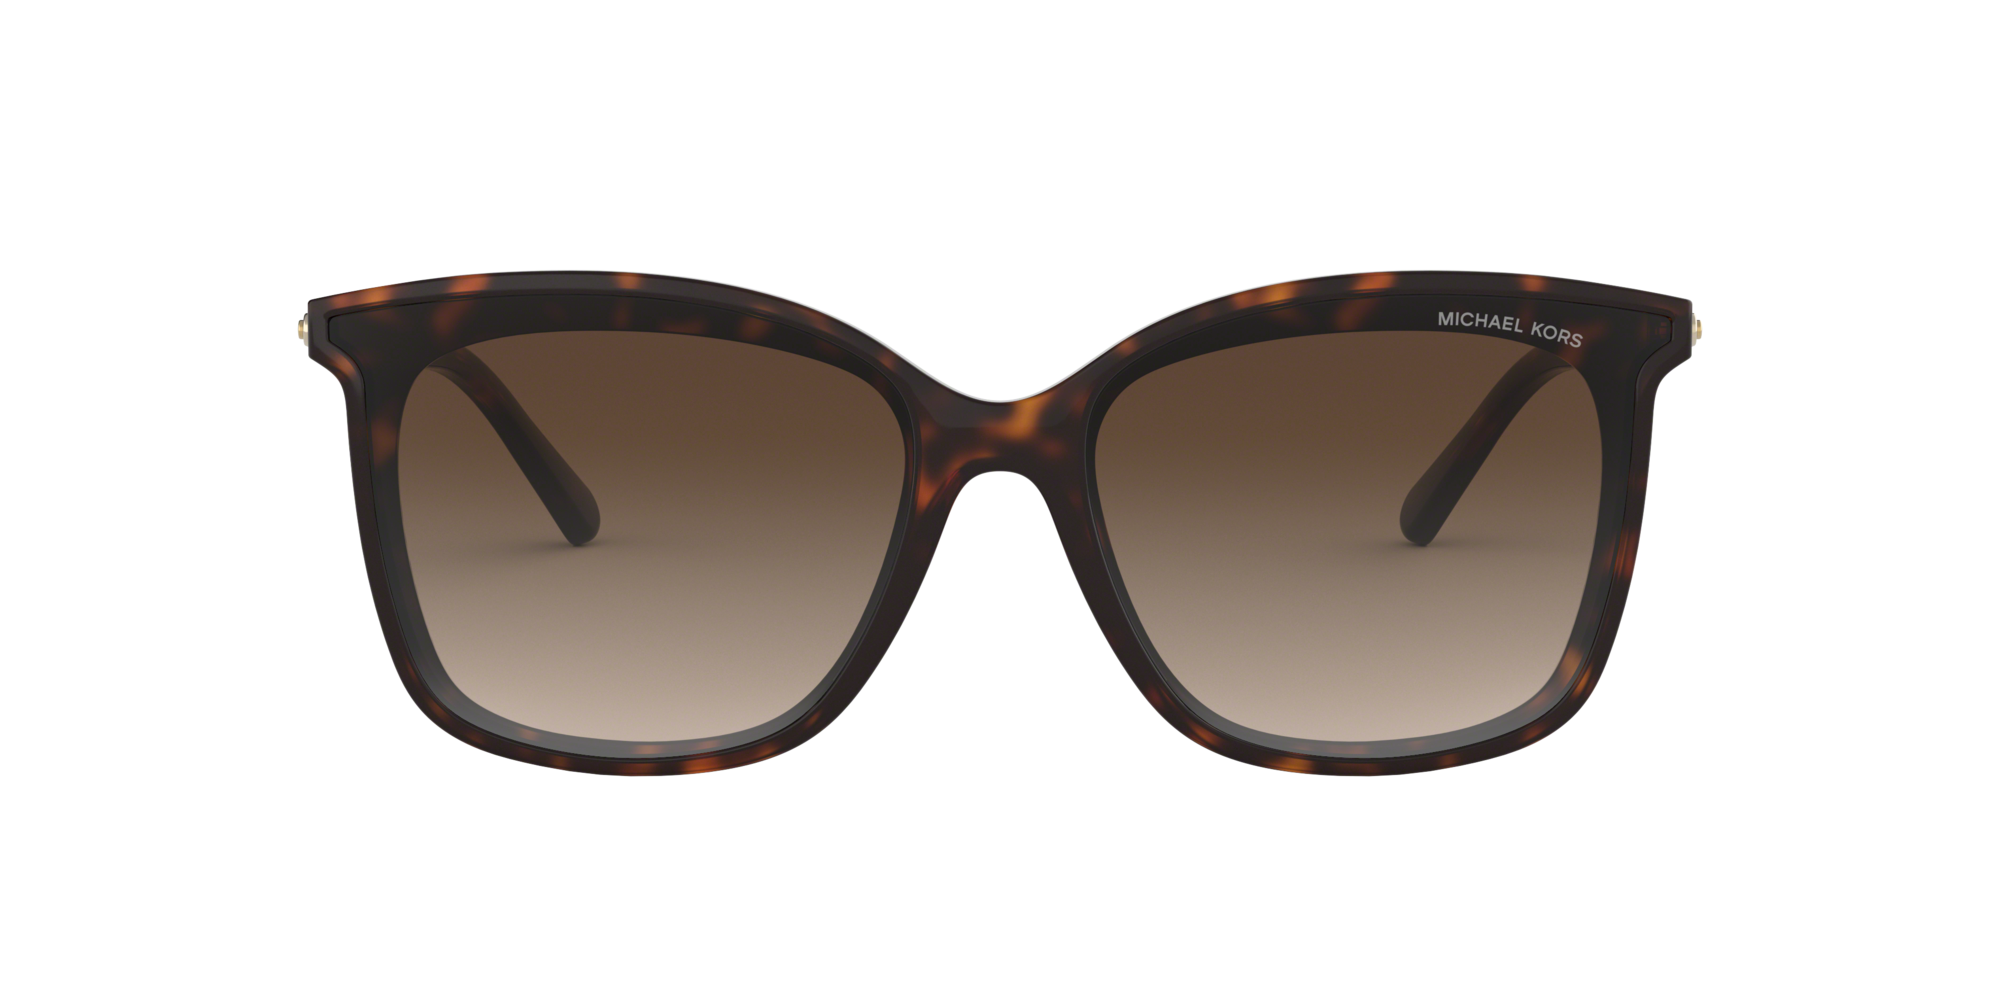 [products.image.front] Michael Kors MK 2079U Sunglasses